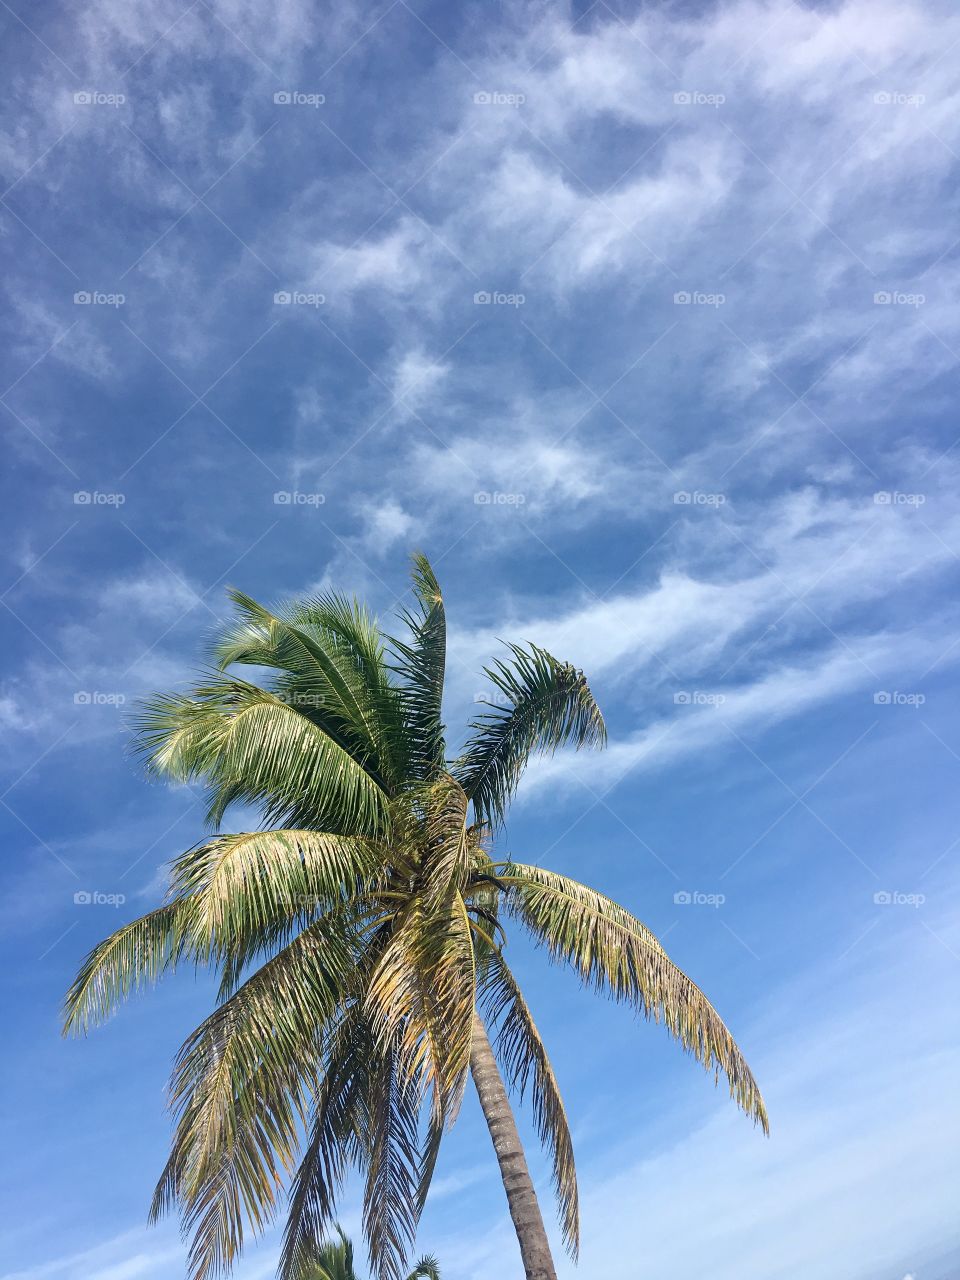 tropical